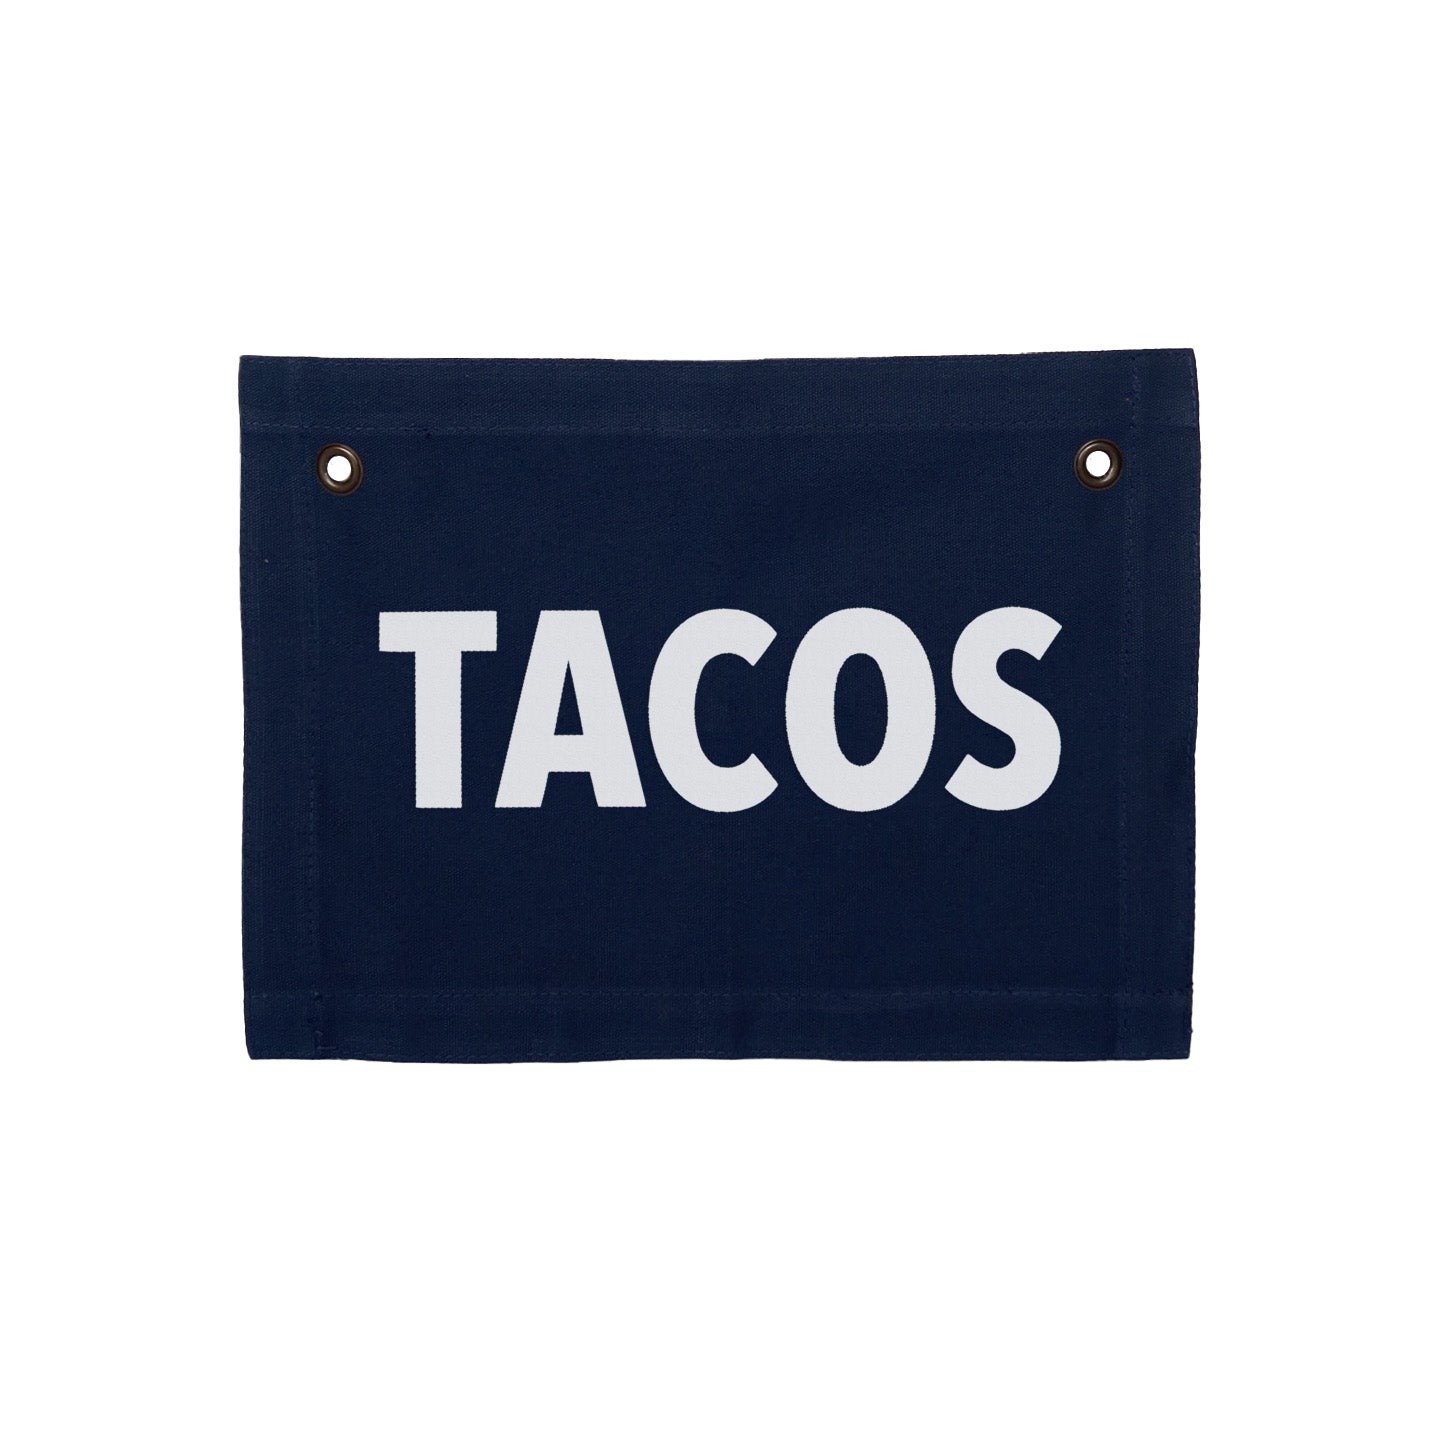 Tacos Small Canvas Flag